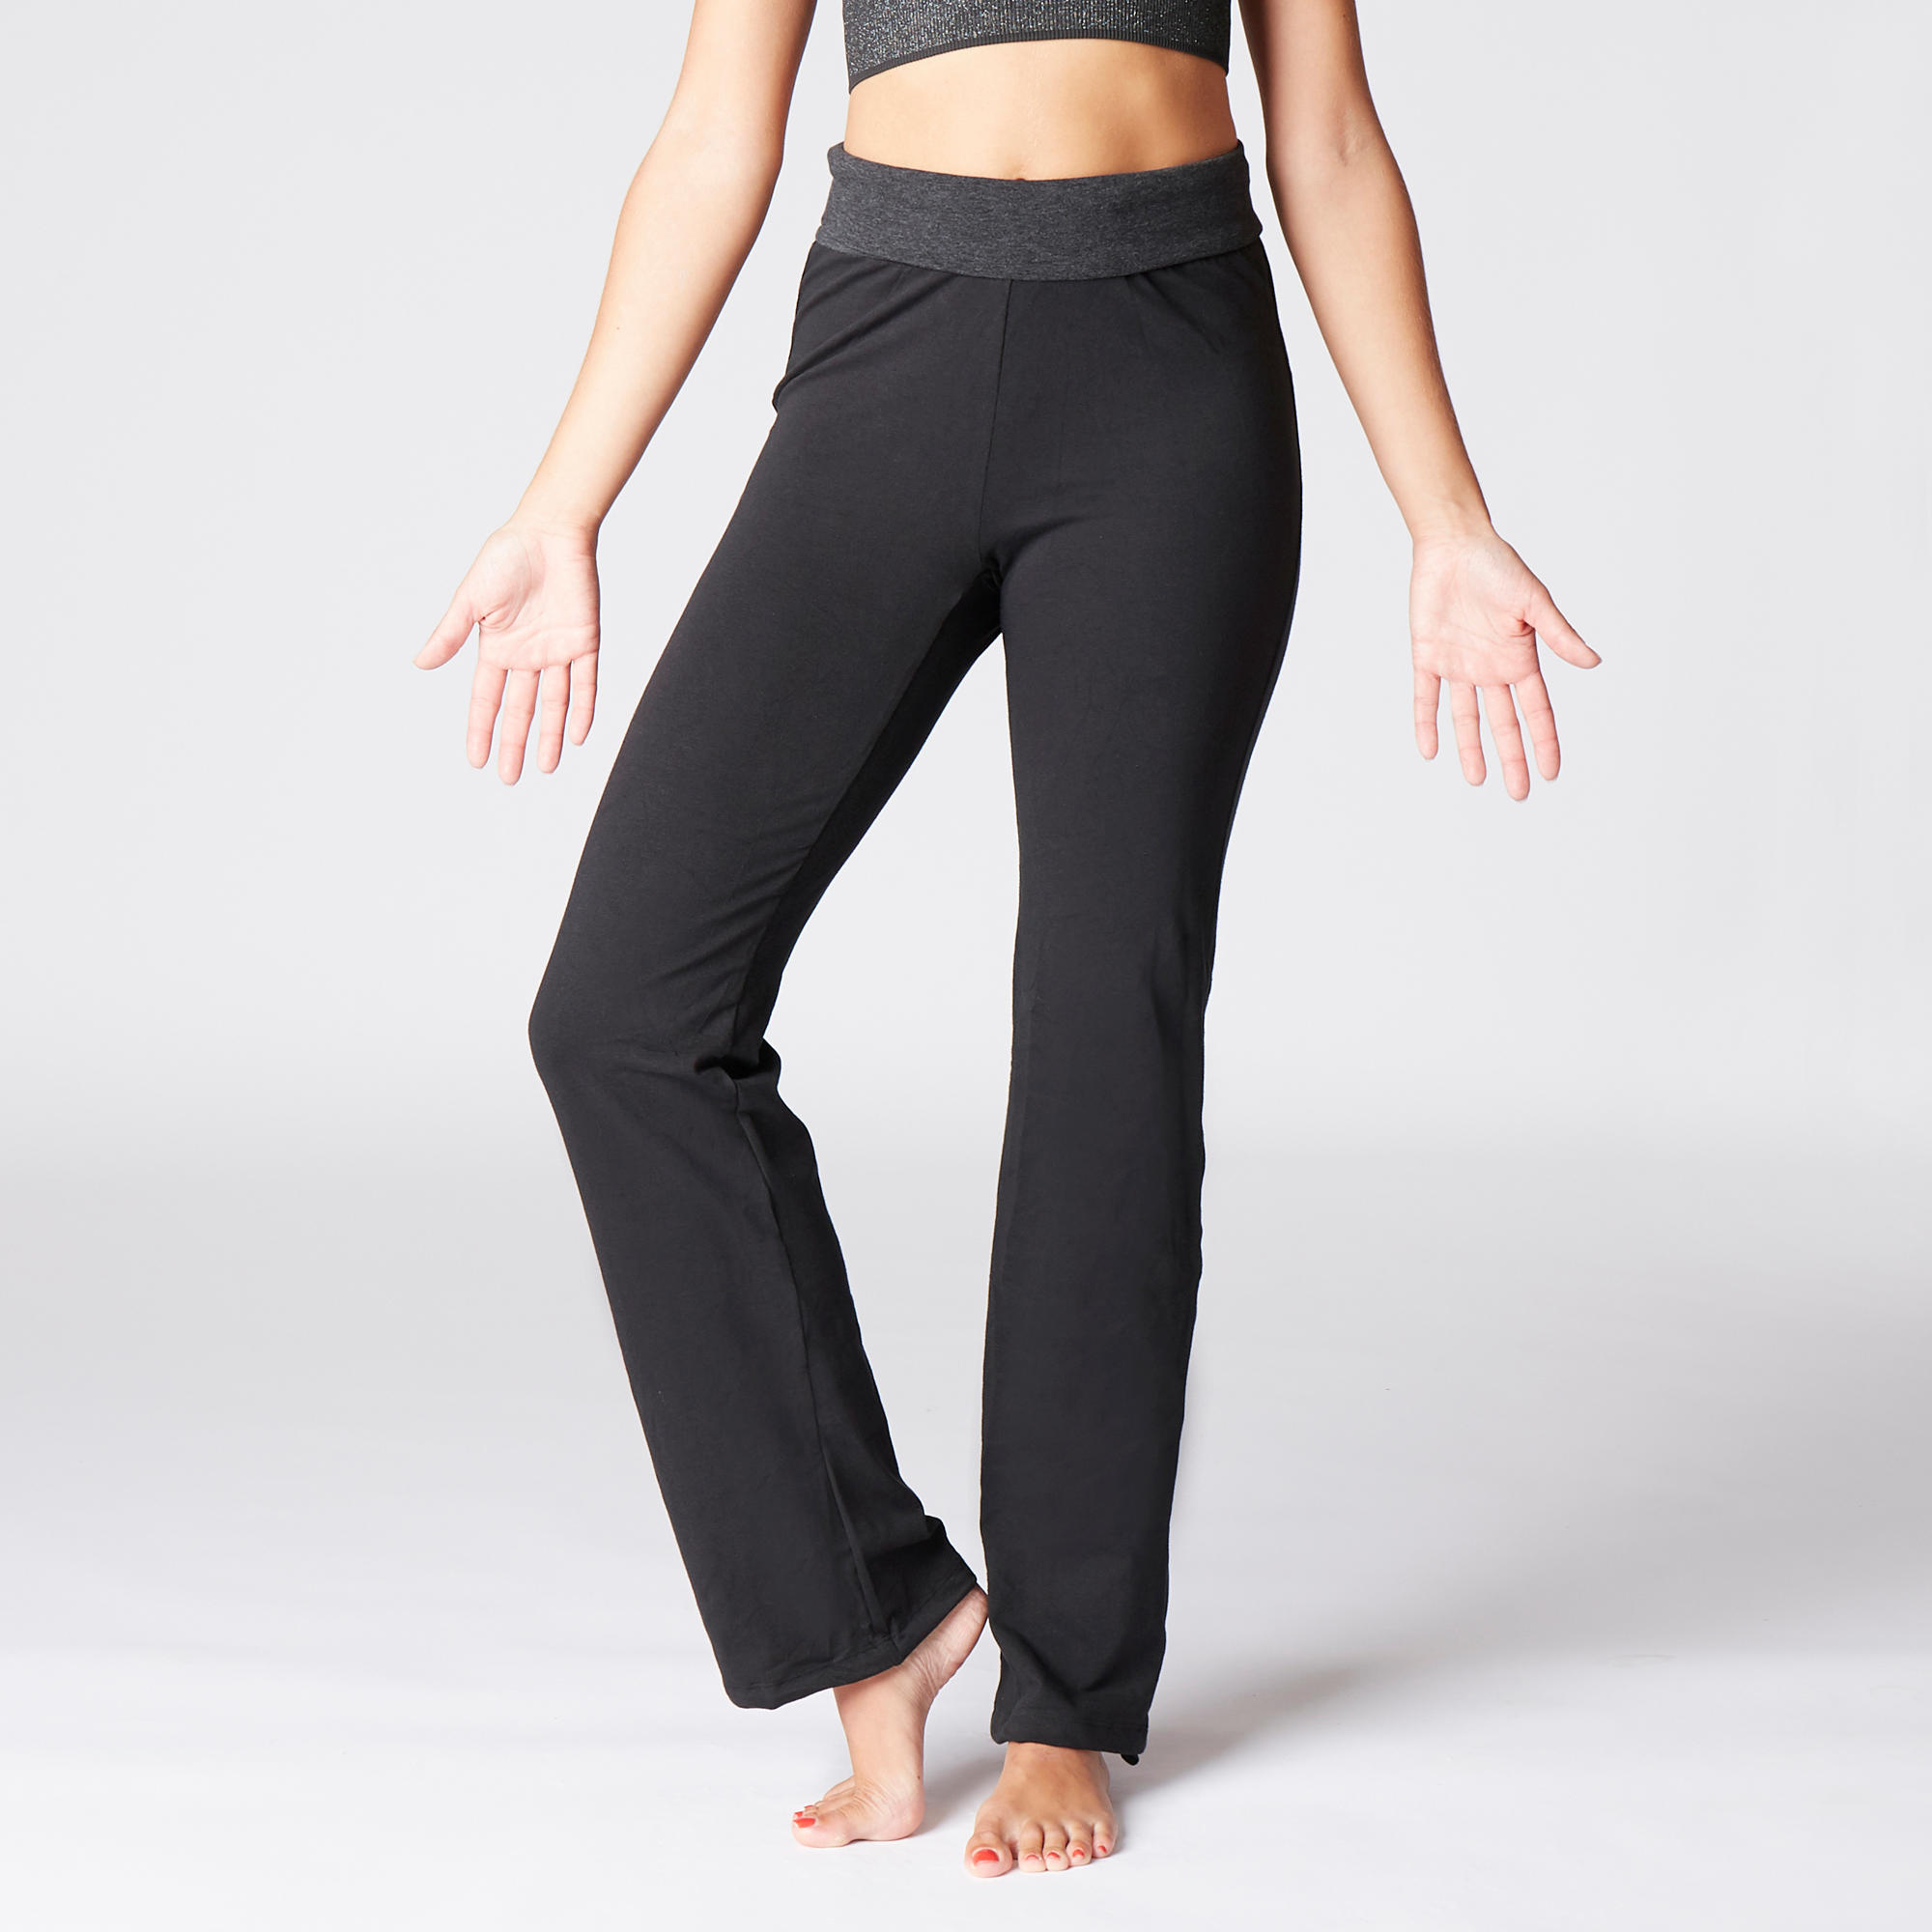 Women's Yoga Cotton Bottoms - Black/Grey 1/10